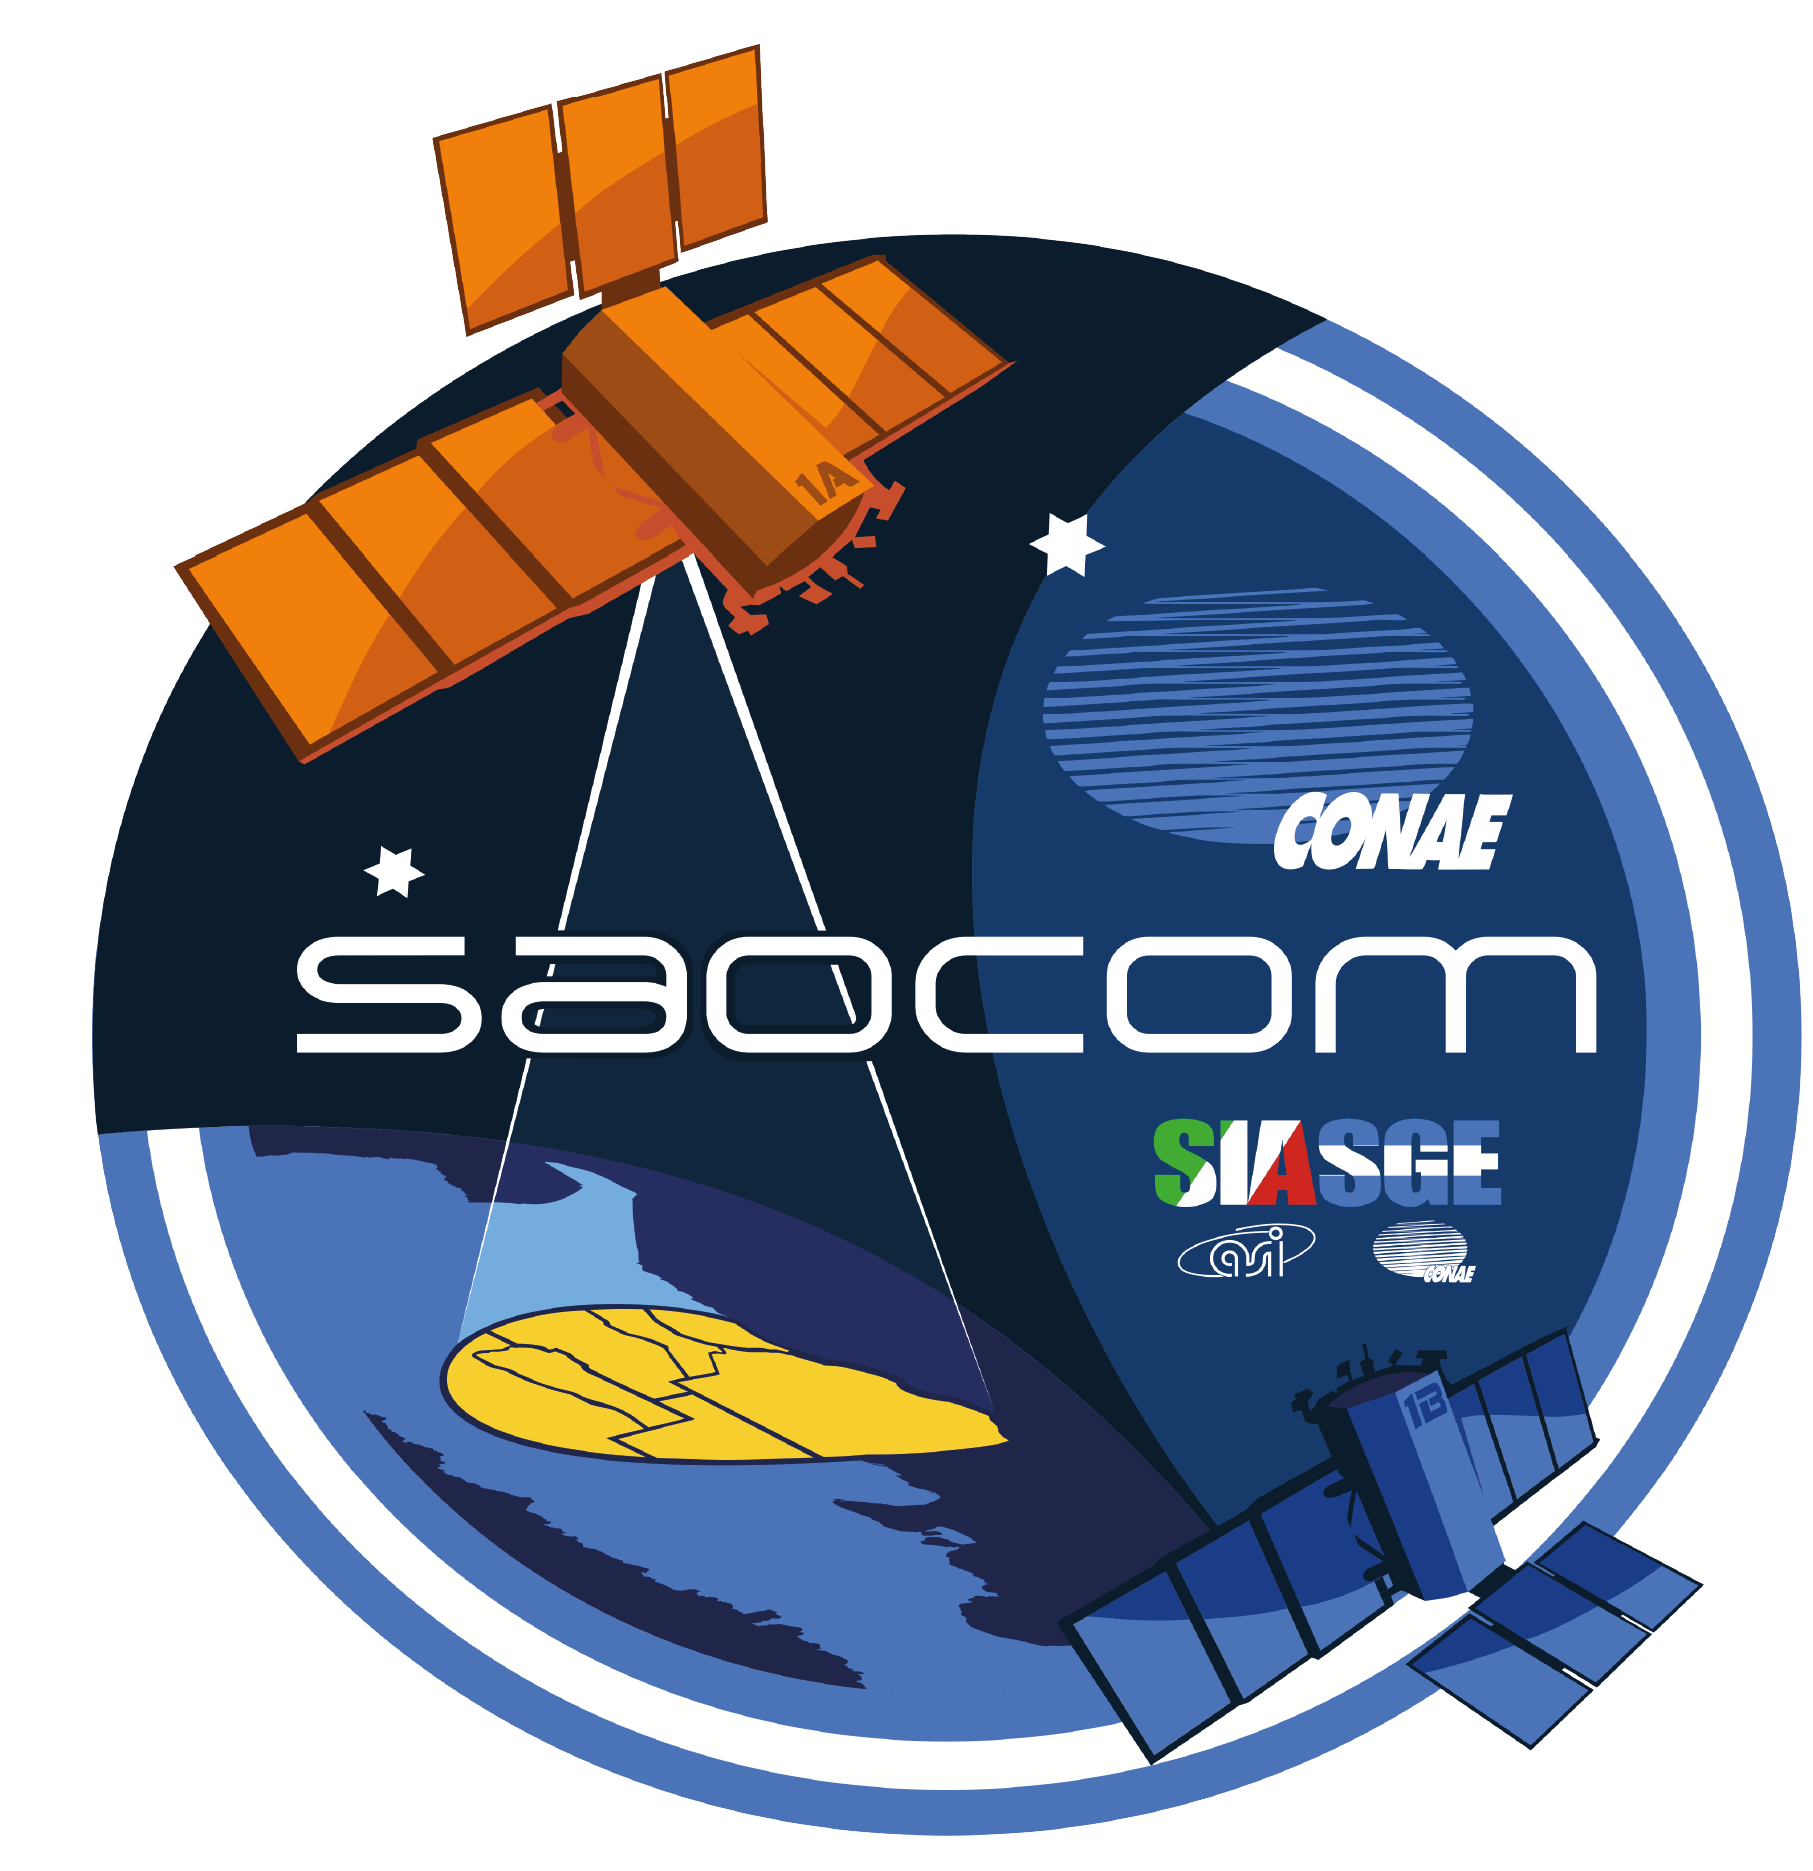 SAOCOM-1 mission patch